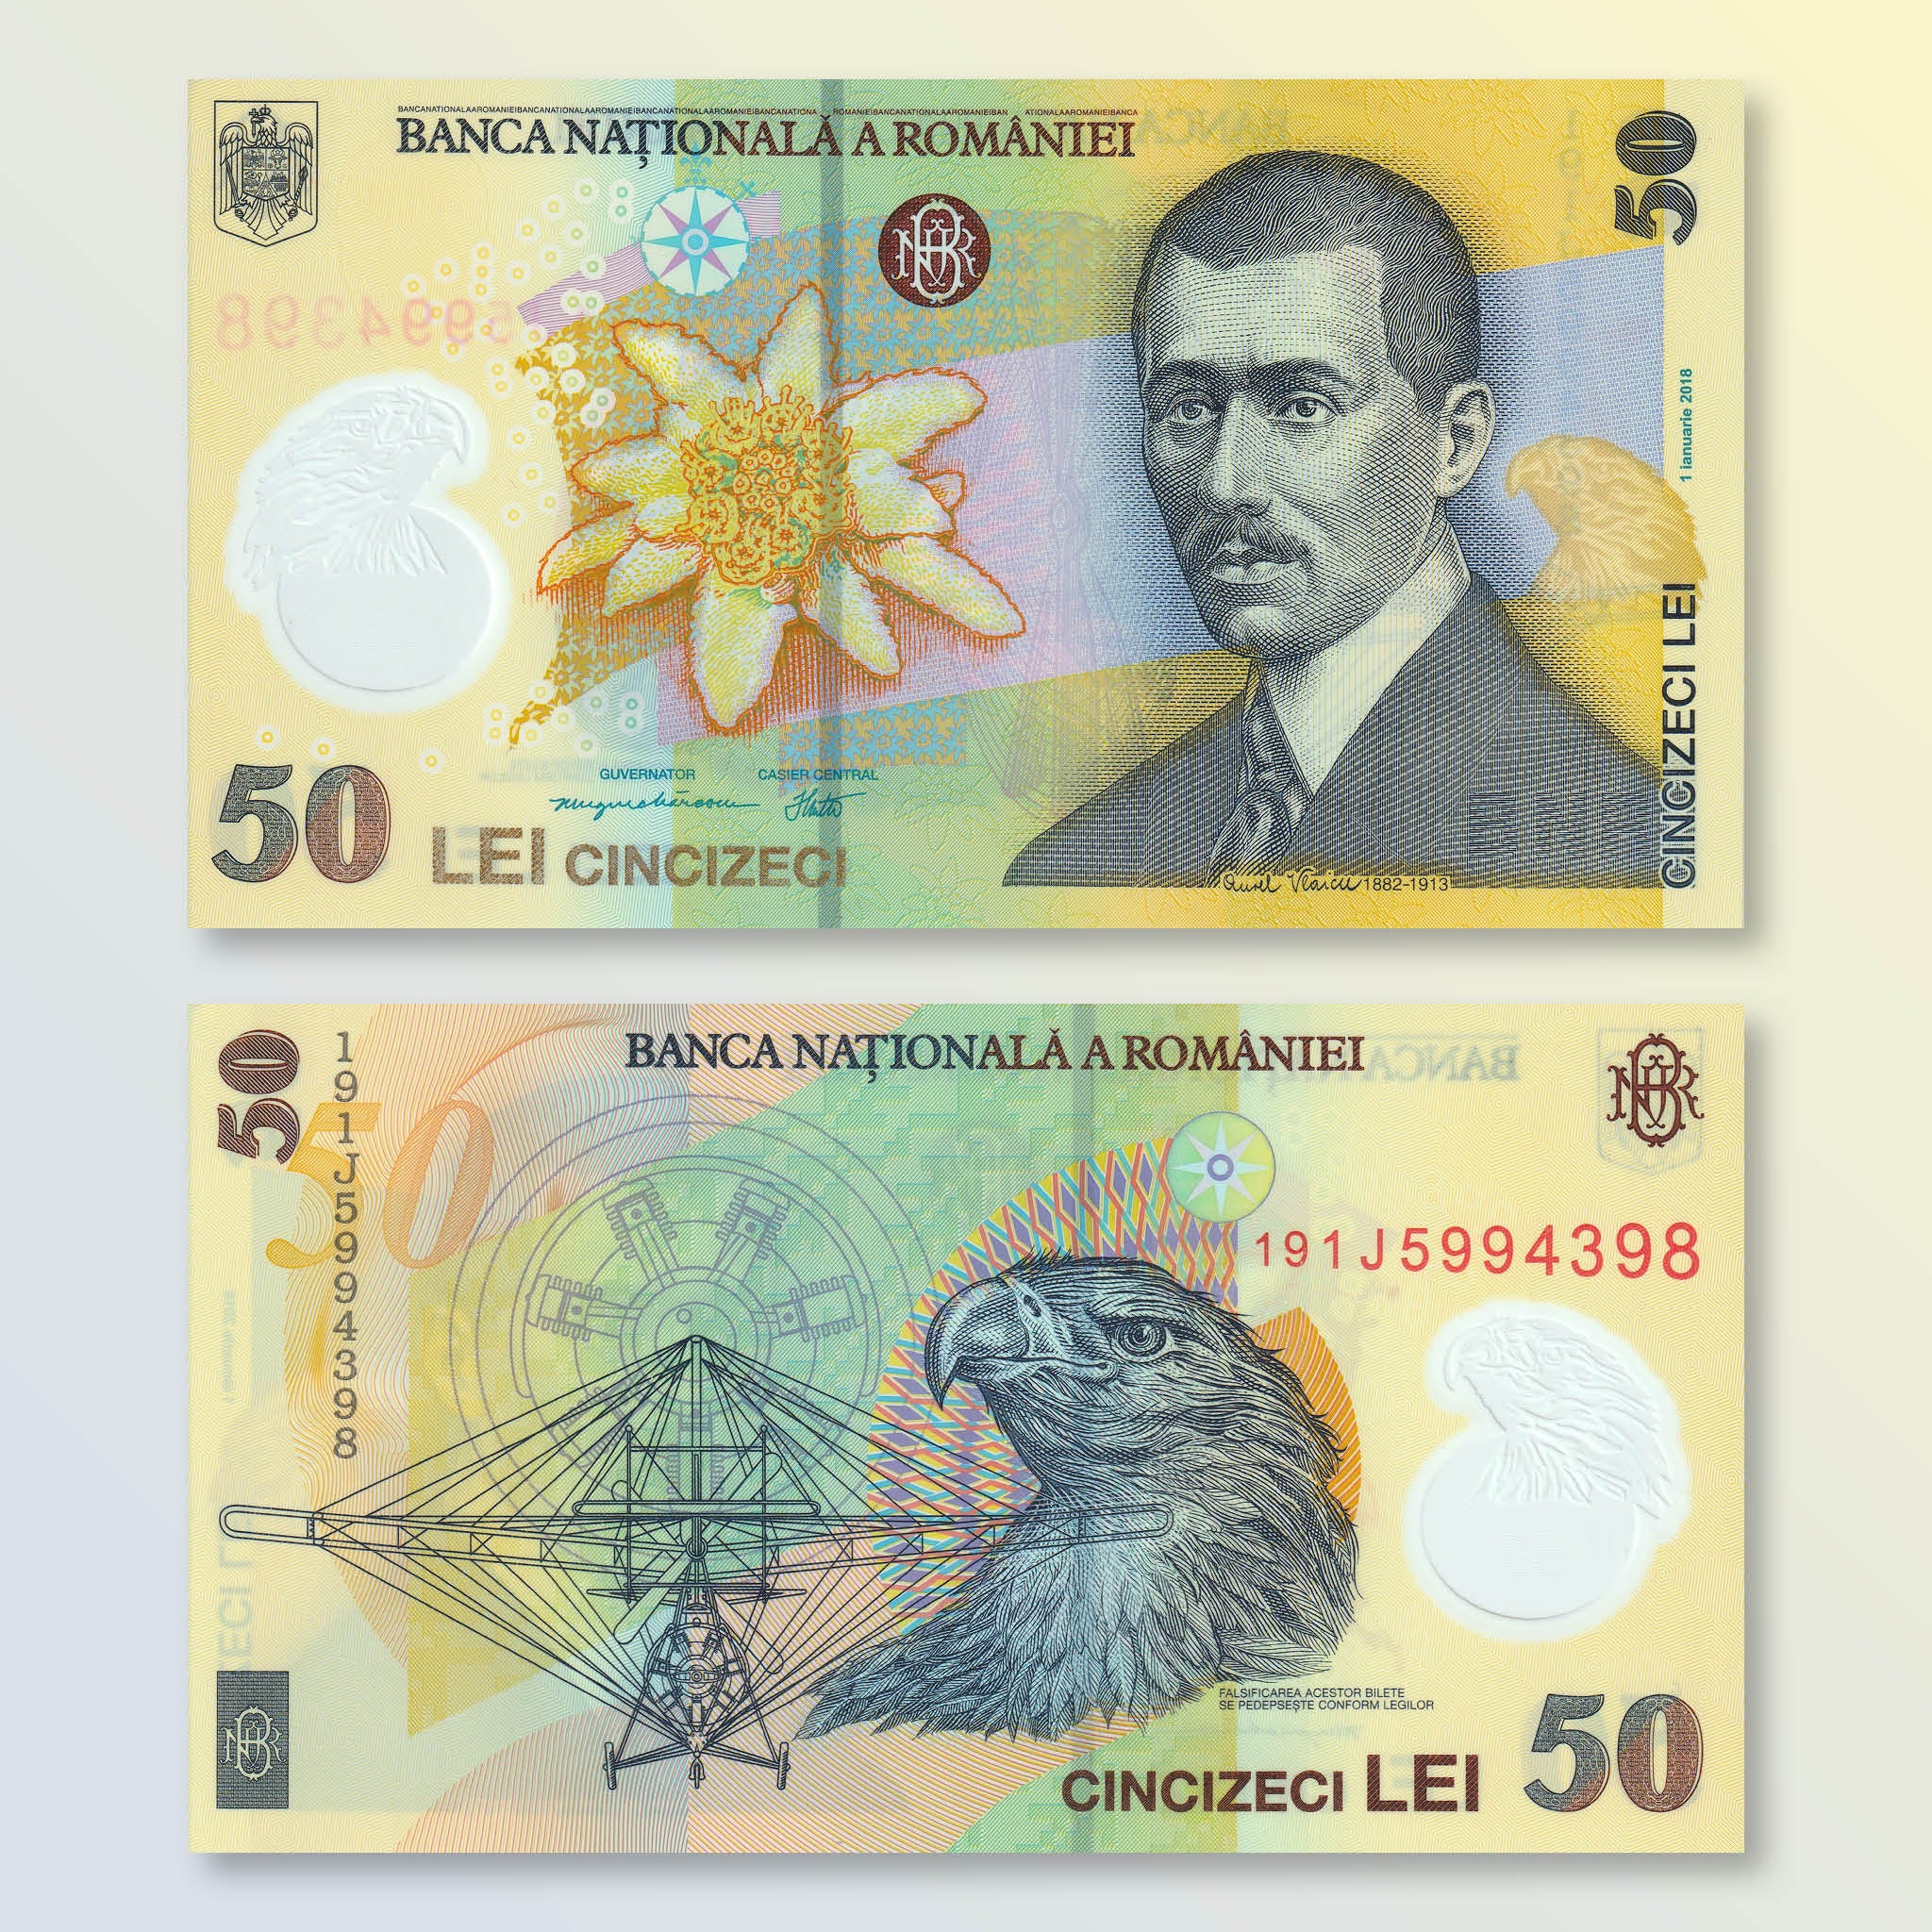 Romania 50 Lei, 2018 (2019), B289b, P120, UNC - Robert's World Money - World Banknotes